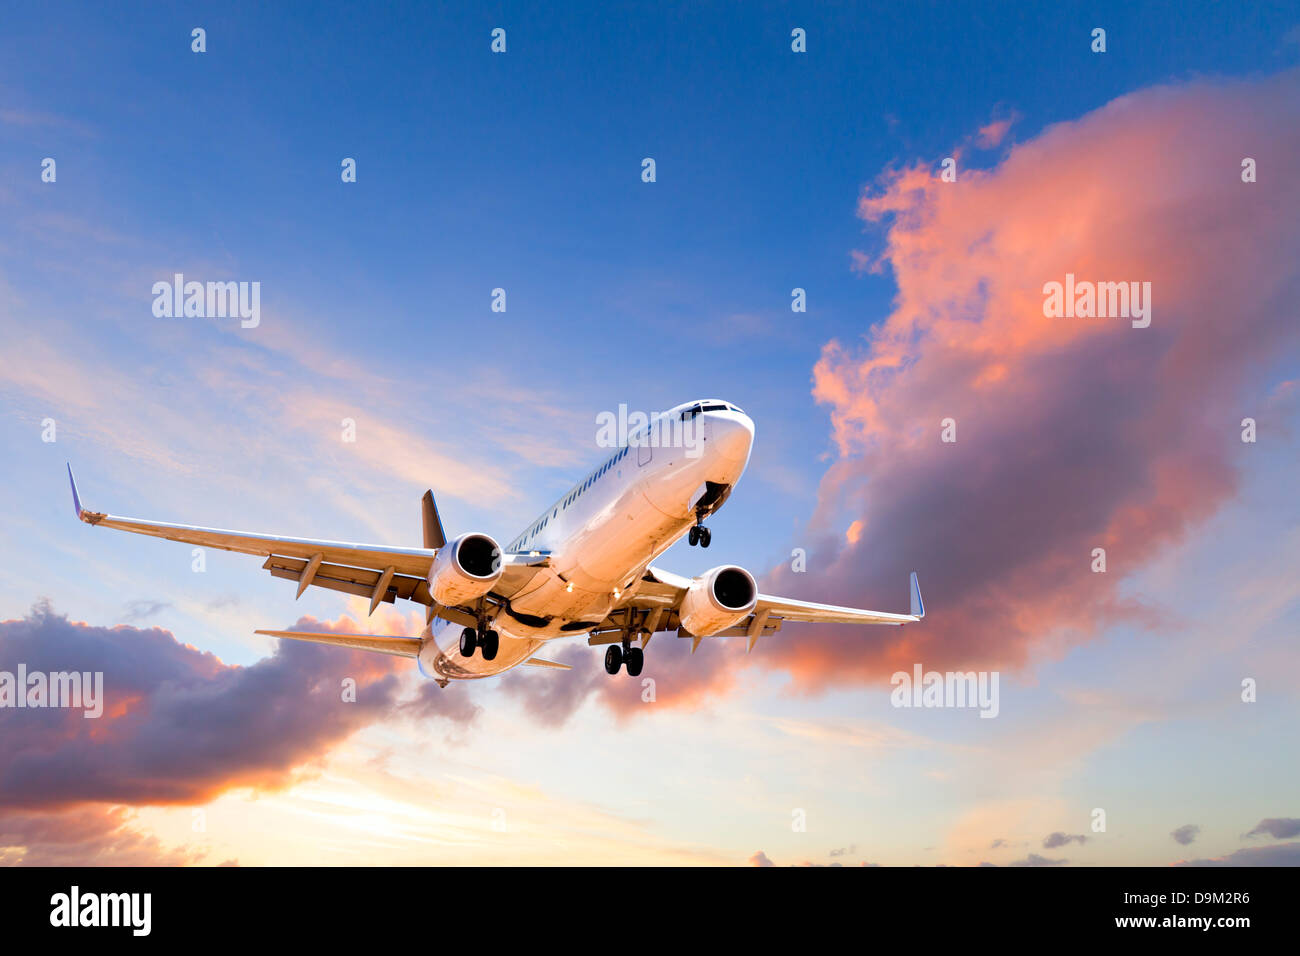 Flugzeug kommt ins Land bei Sonnenuntergang - Boeing 737 kommen, um bei Sonnenuntergang zu landen. Stockfoto